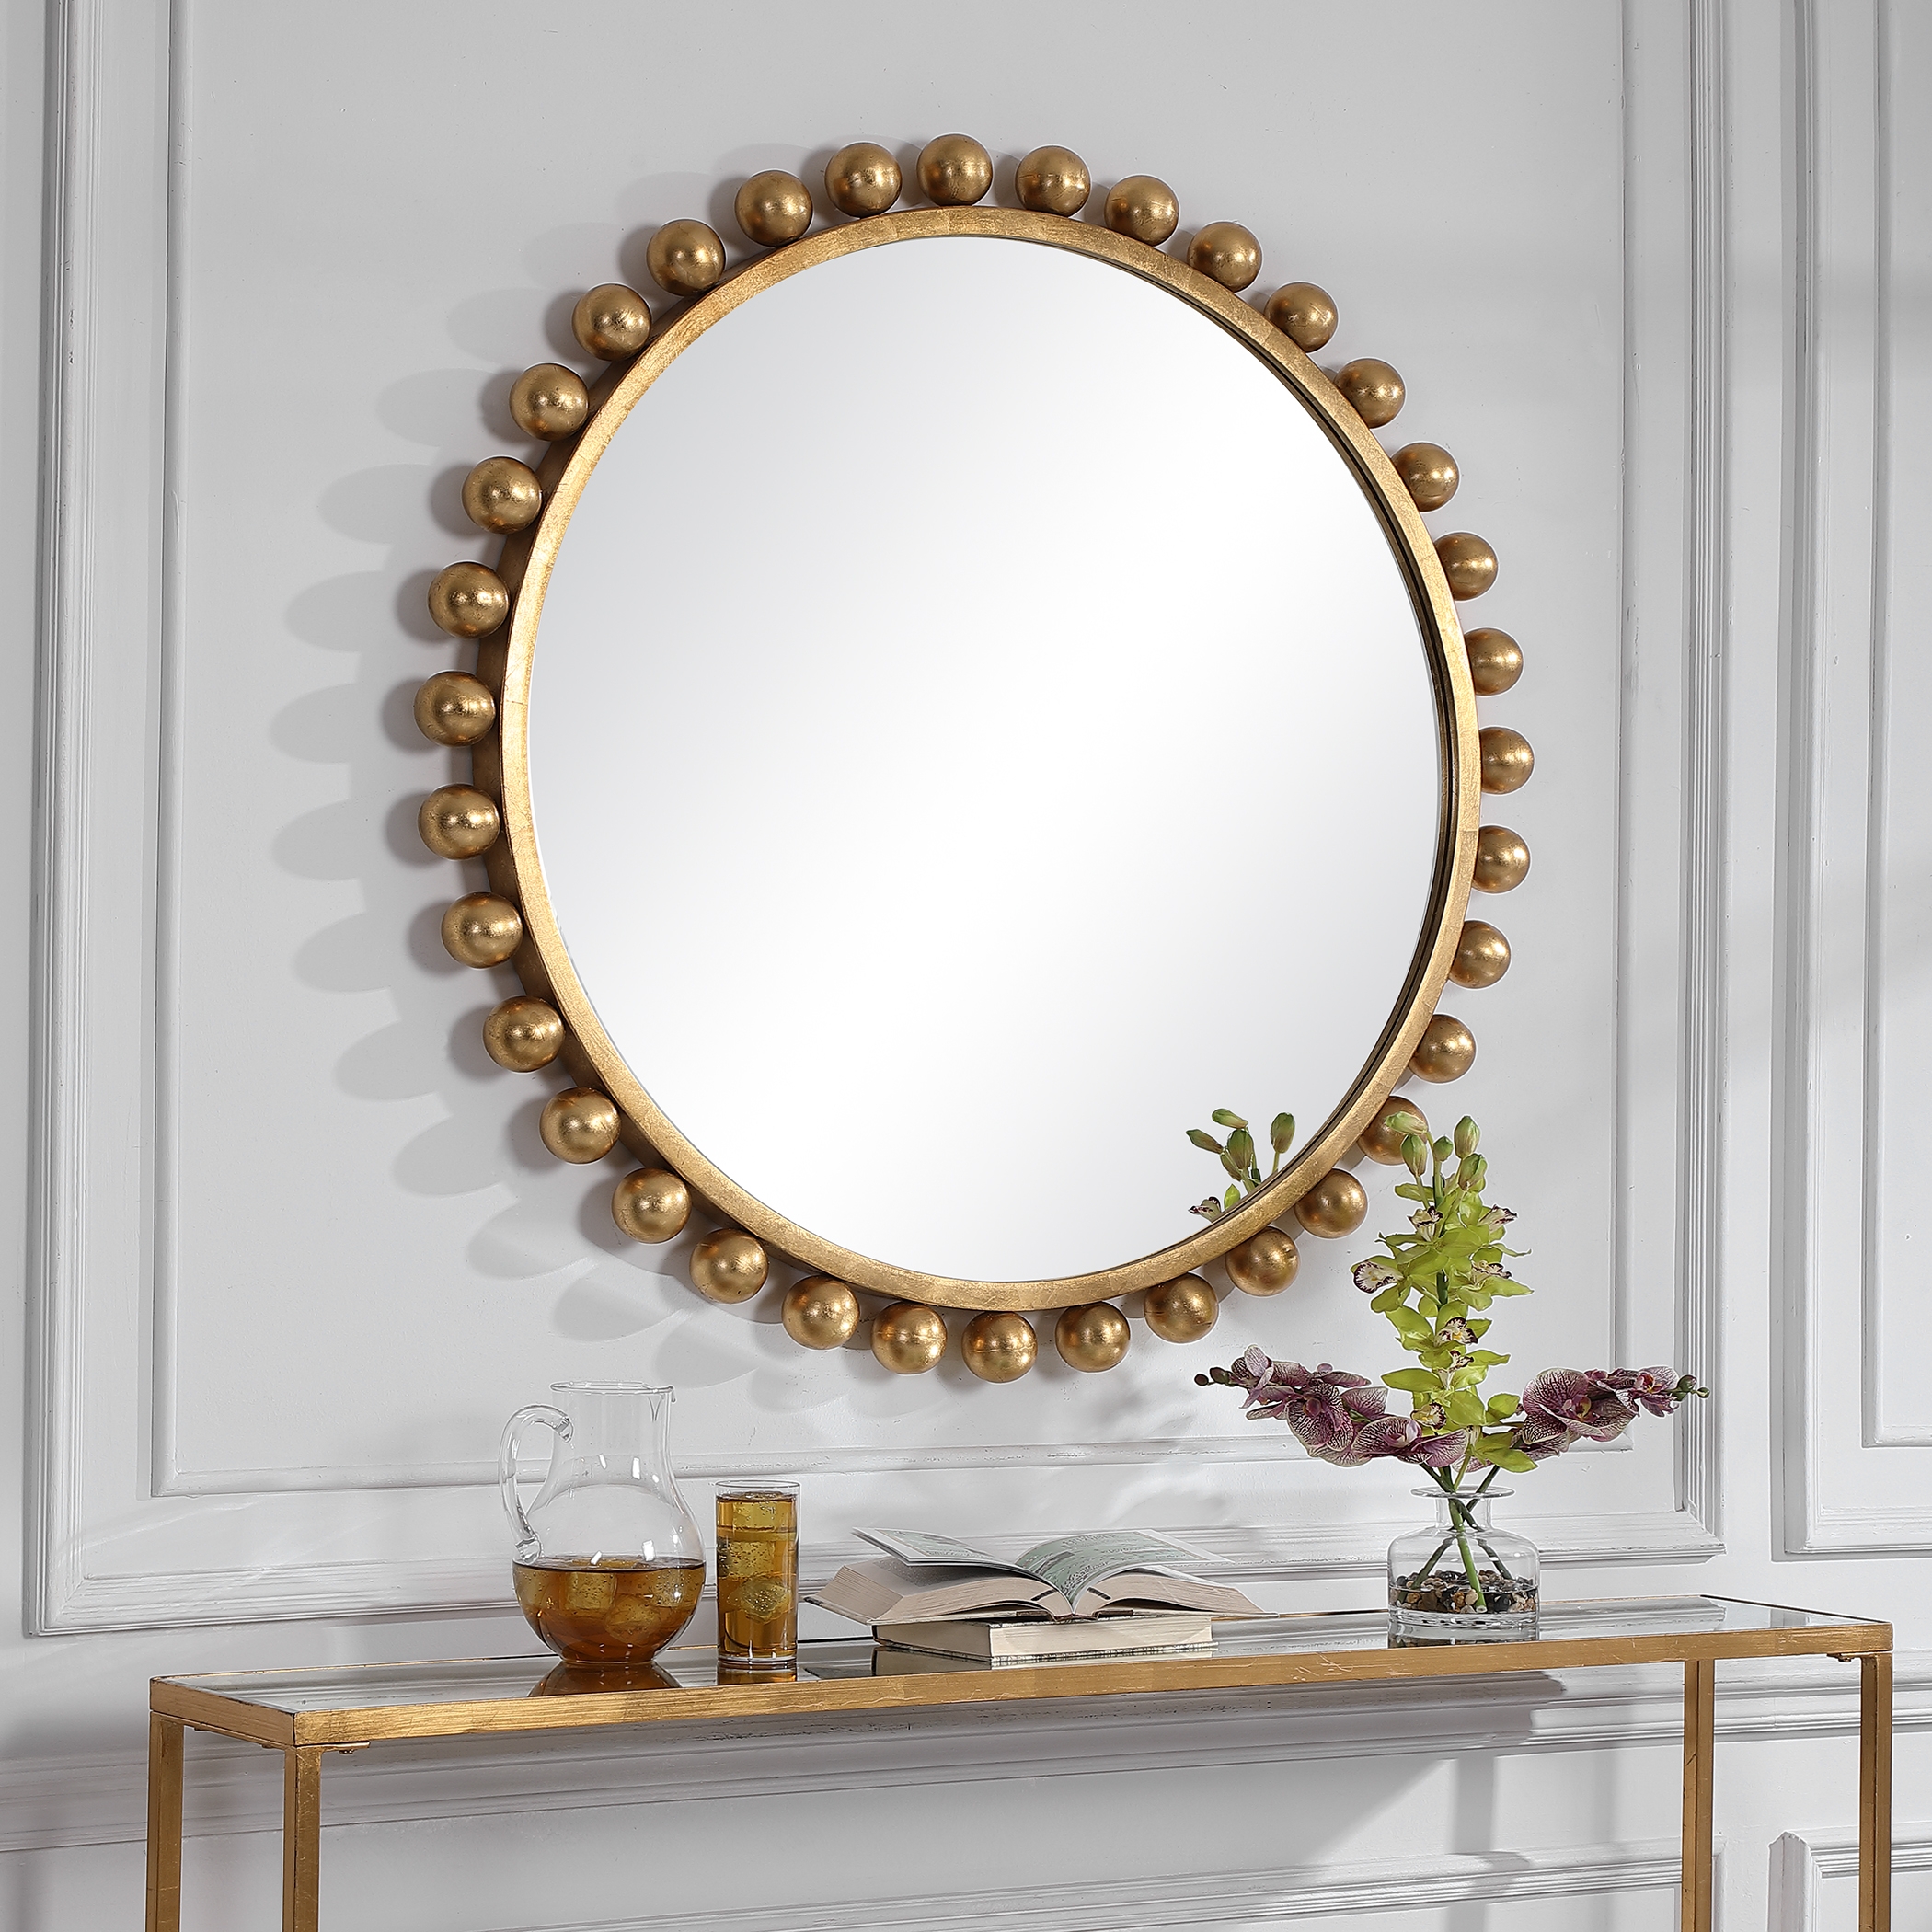 Cyra Round Mirror, Gold - Image 5